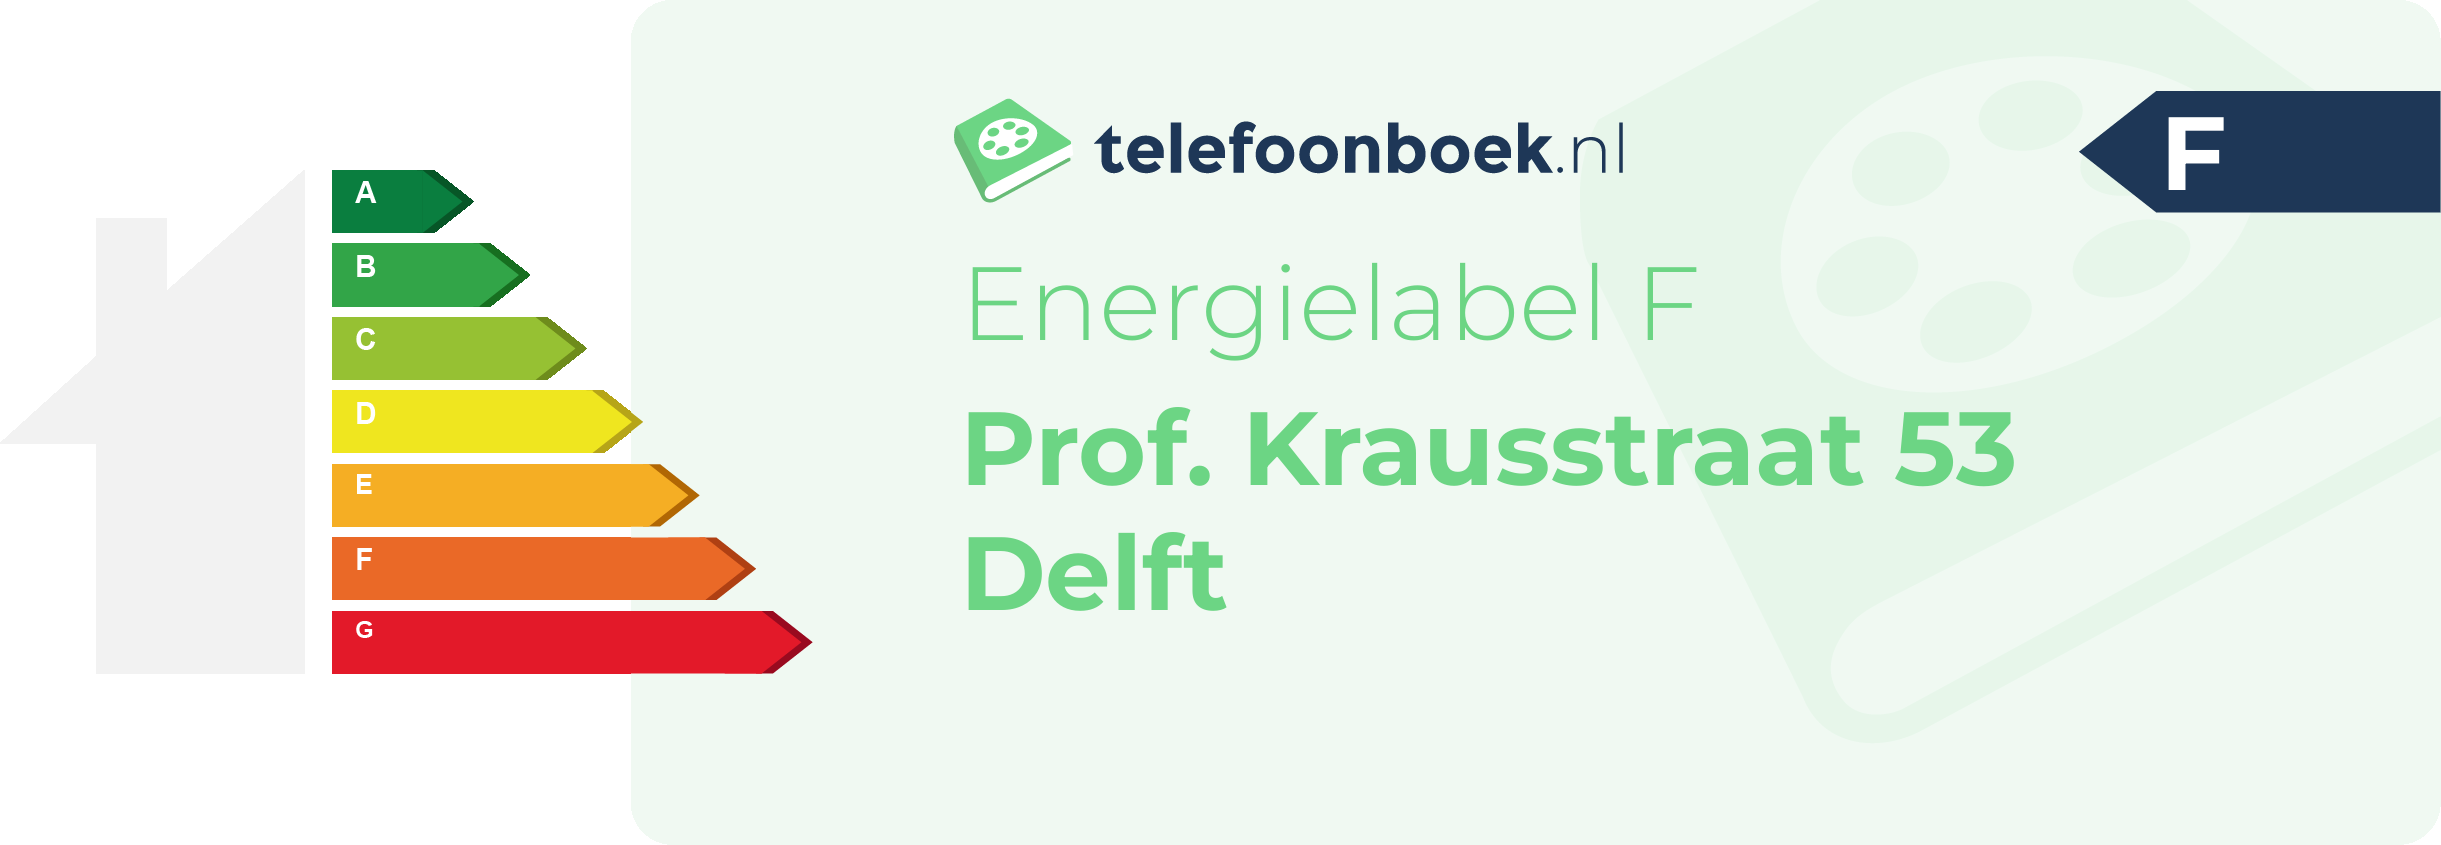 Energielabel Prof. Krausstraat 53 Delft